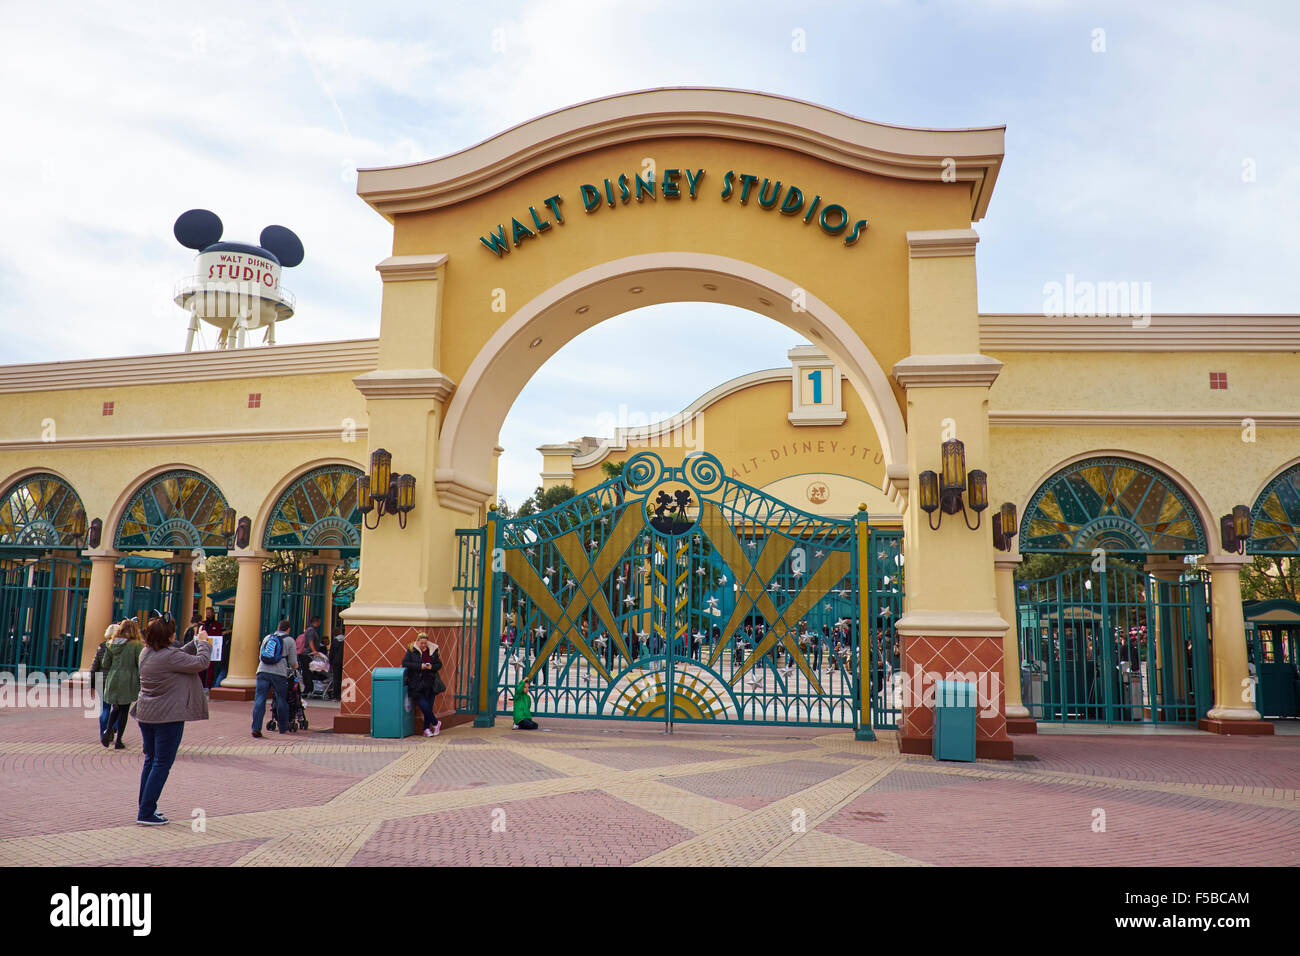 Entrance To Walt Disney Studios Disneyland Paris Marne-la-Vallee Chessy France Stock Photo